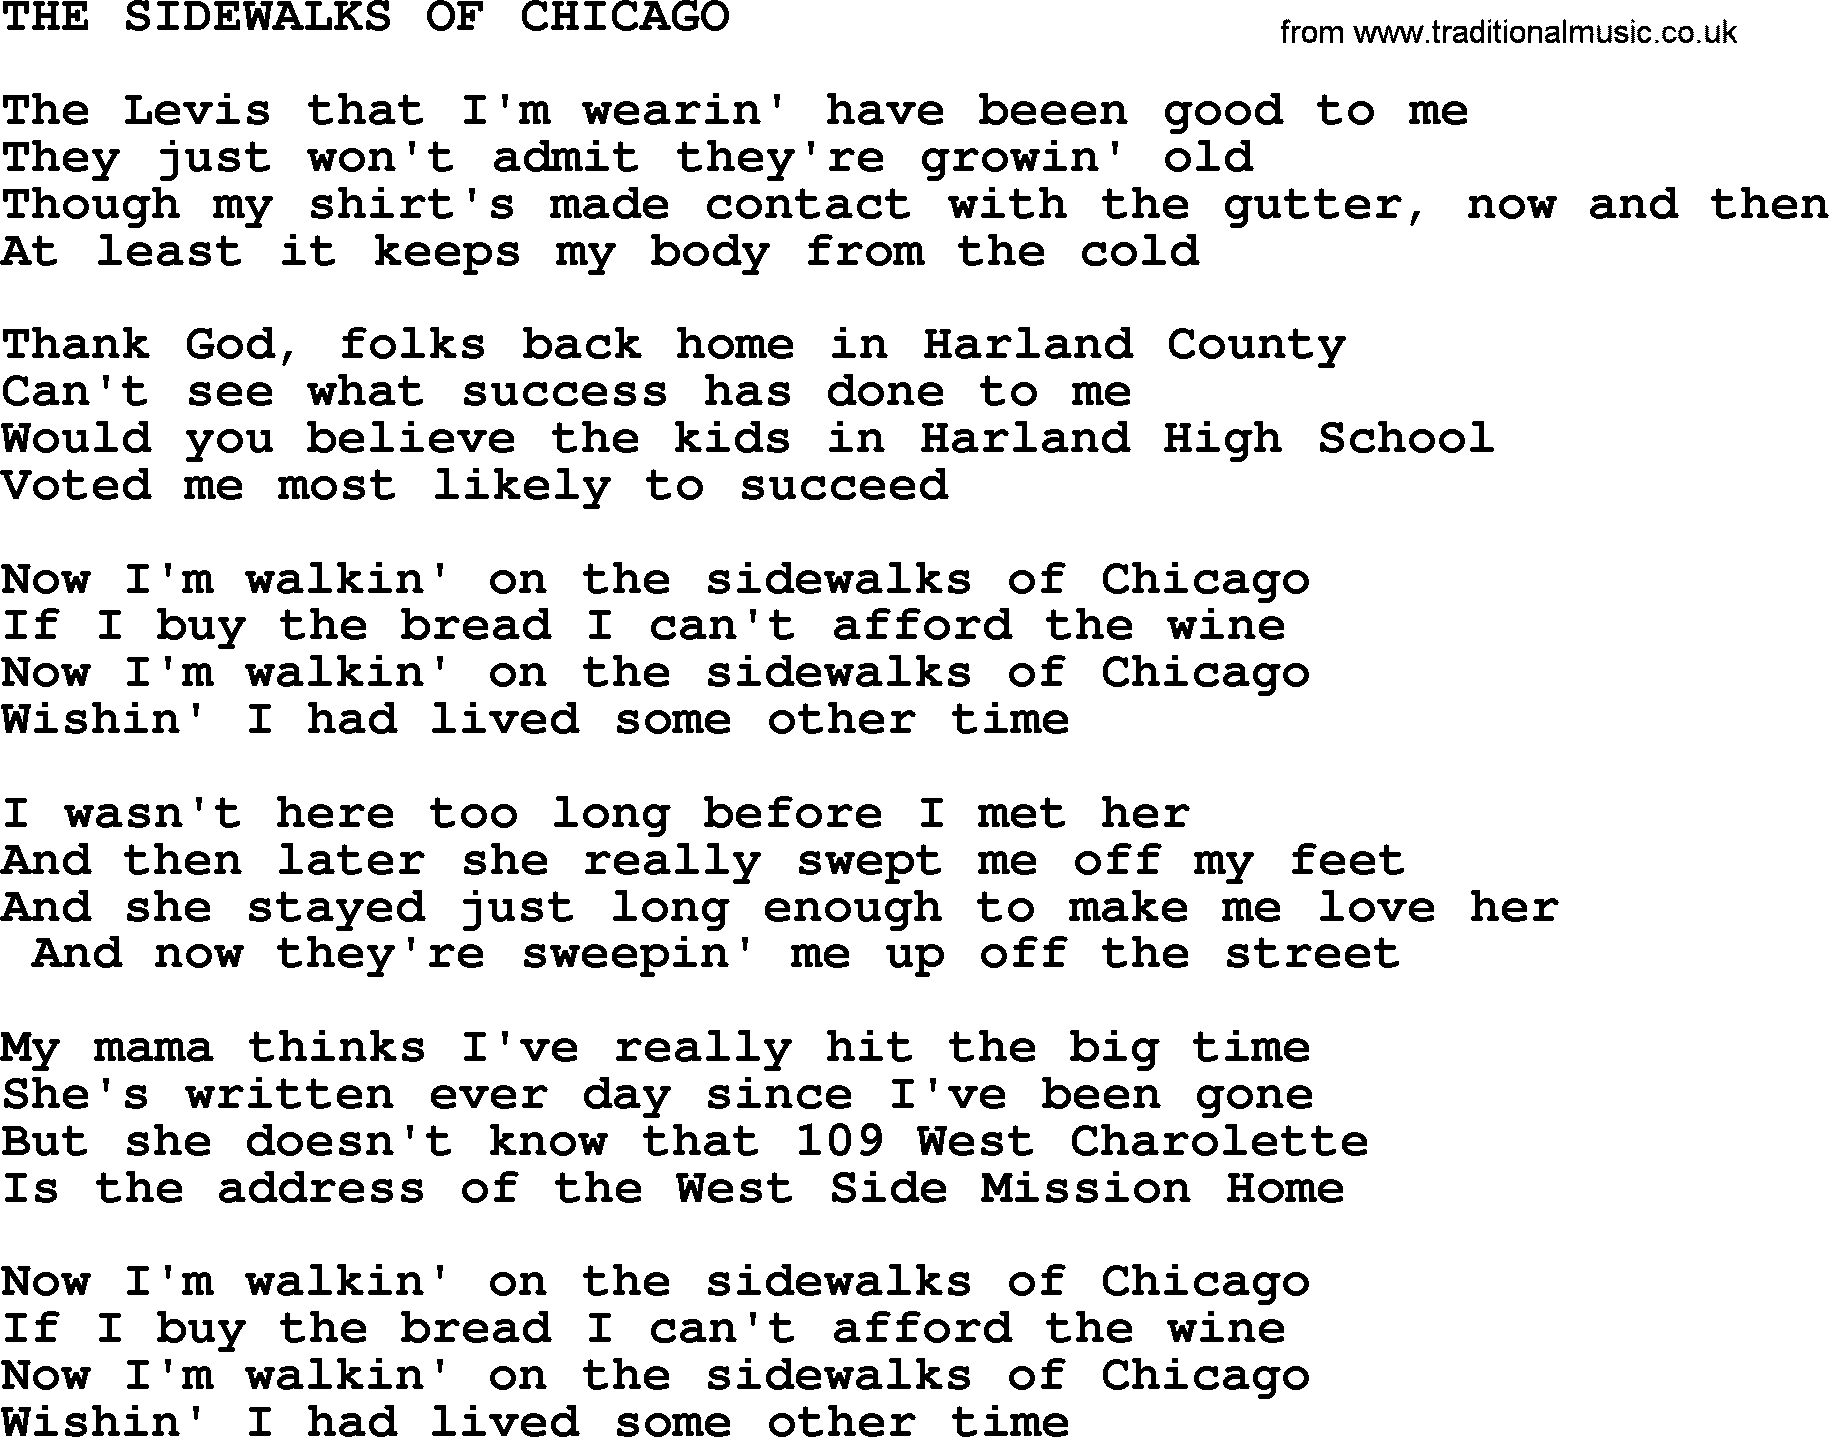 Merle Haggard song: The Sidewalks Of Chicago, lyrics.